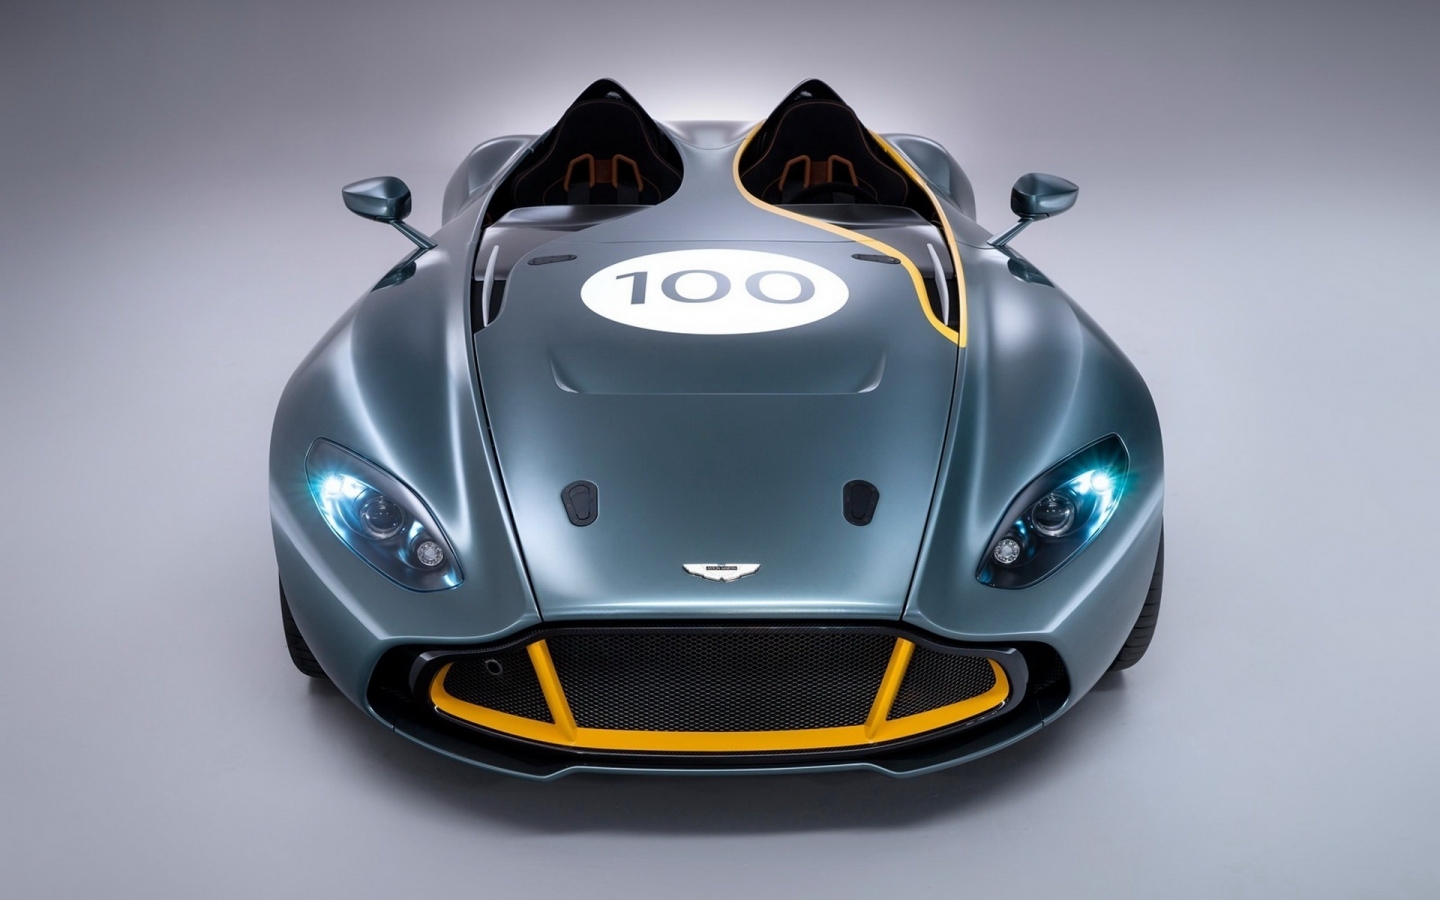 Aston Martin CC100 Speedster Front View for 1440 x 900 widescreen resolution